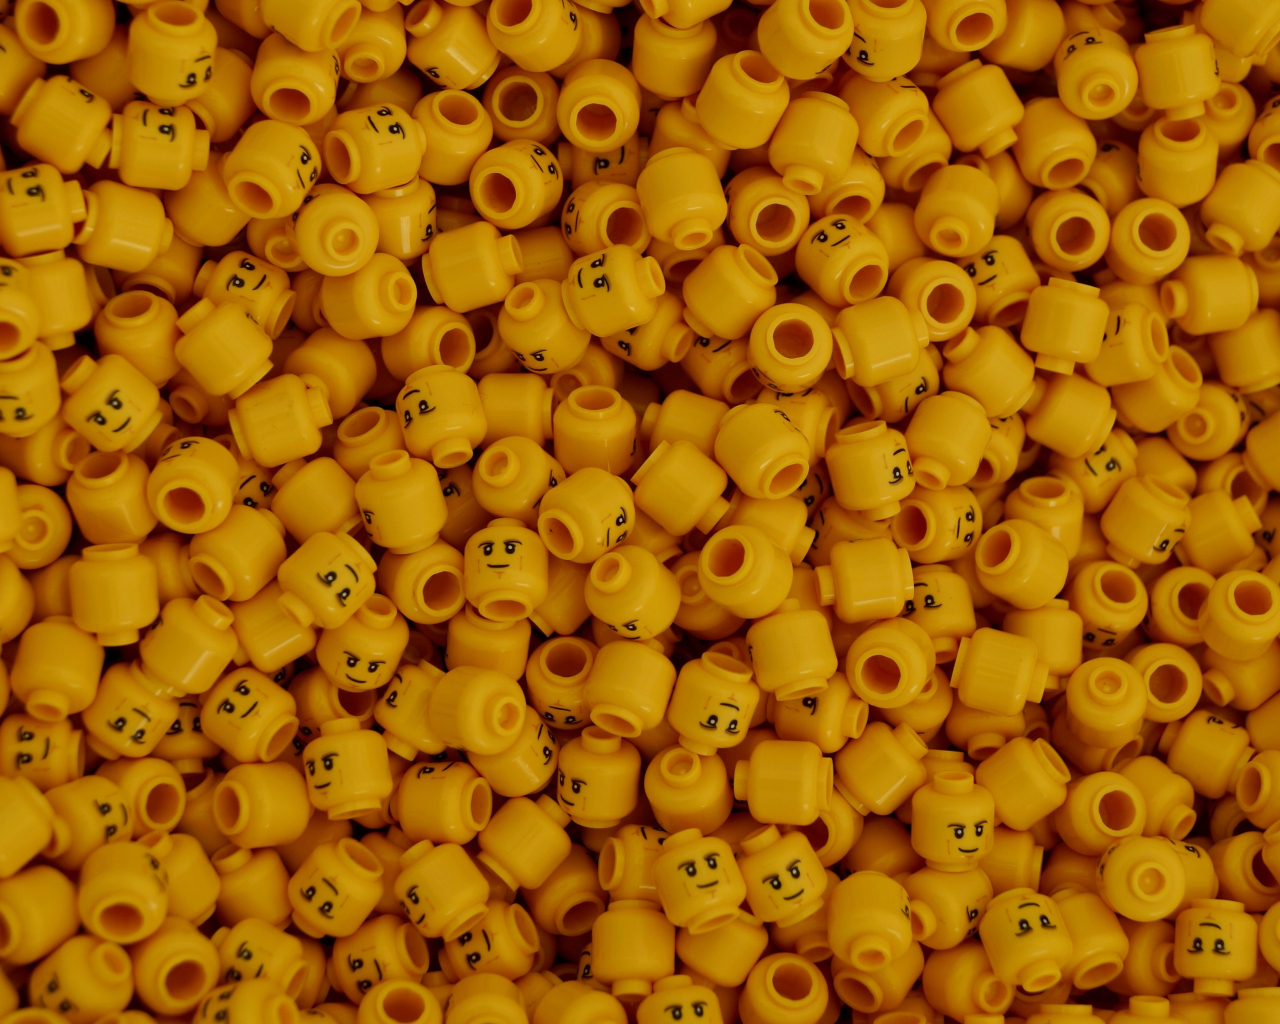 Yellow, Lego, toy, 1280x1024 wallpaper